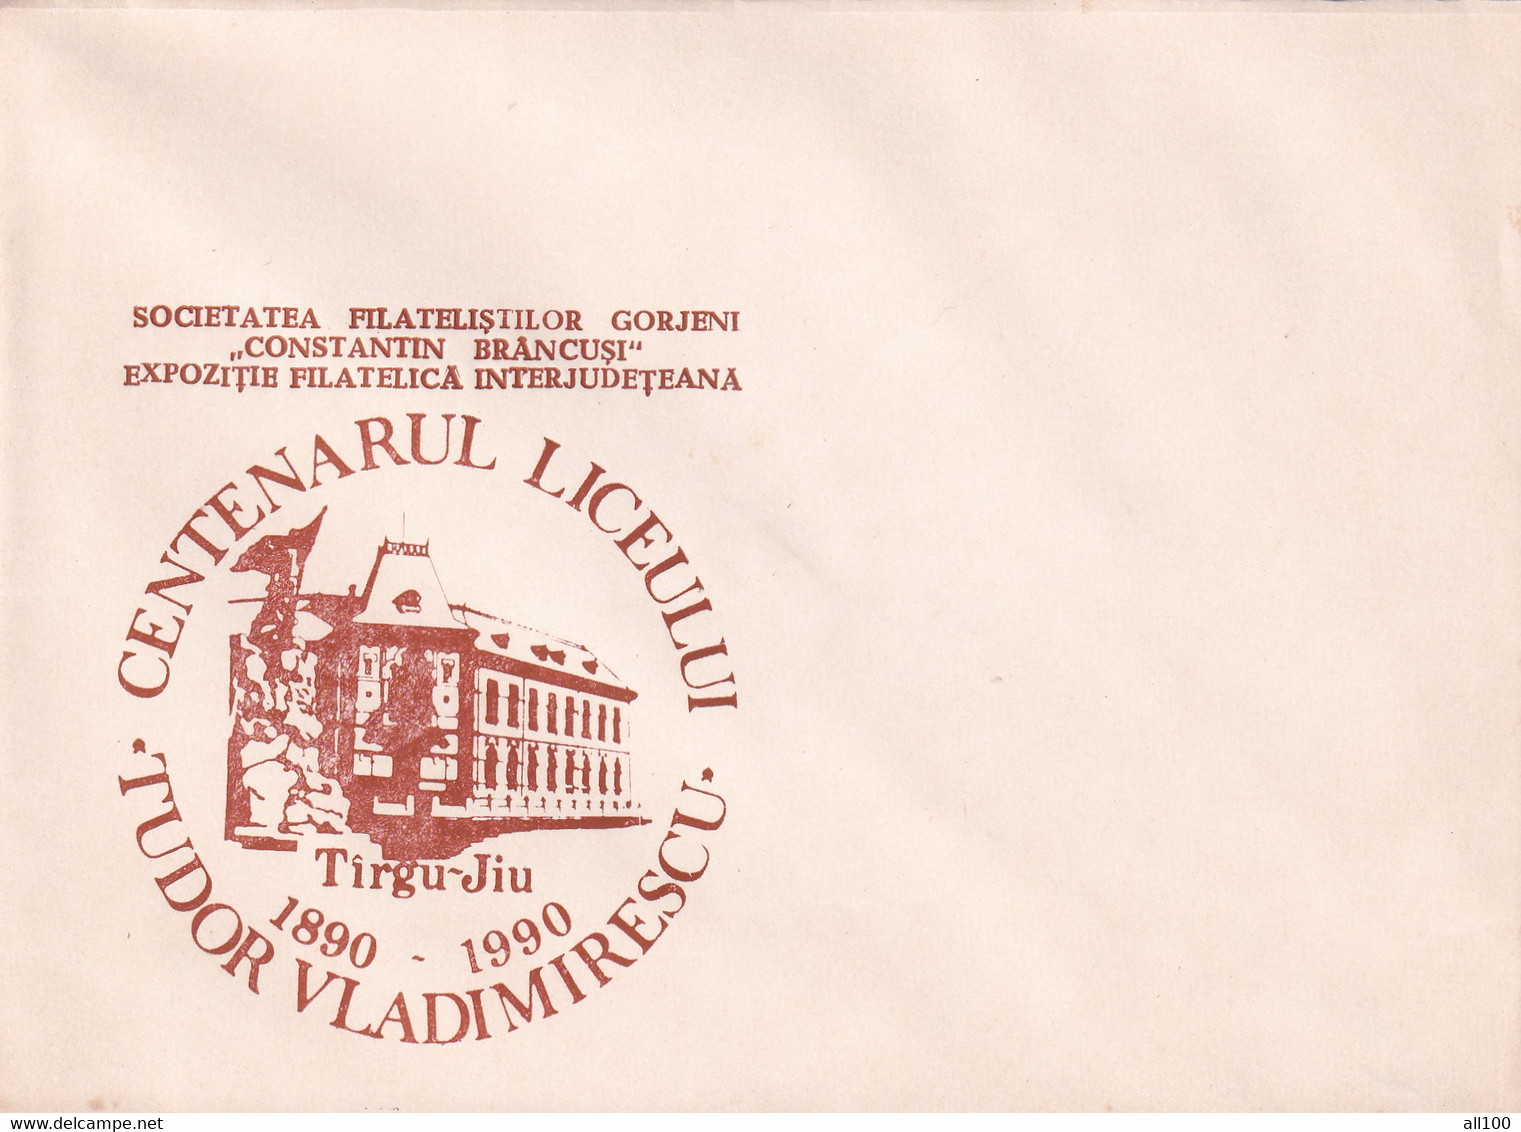 A19349 - CENTENARUL LICEULUI TUDOR VLADIMIRESCU TARGU JIU TIRGU-JIU COVER ENVELOPE UNUSED 1990 ROMANIA - Briefe U. Dokumente